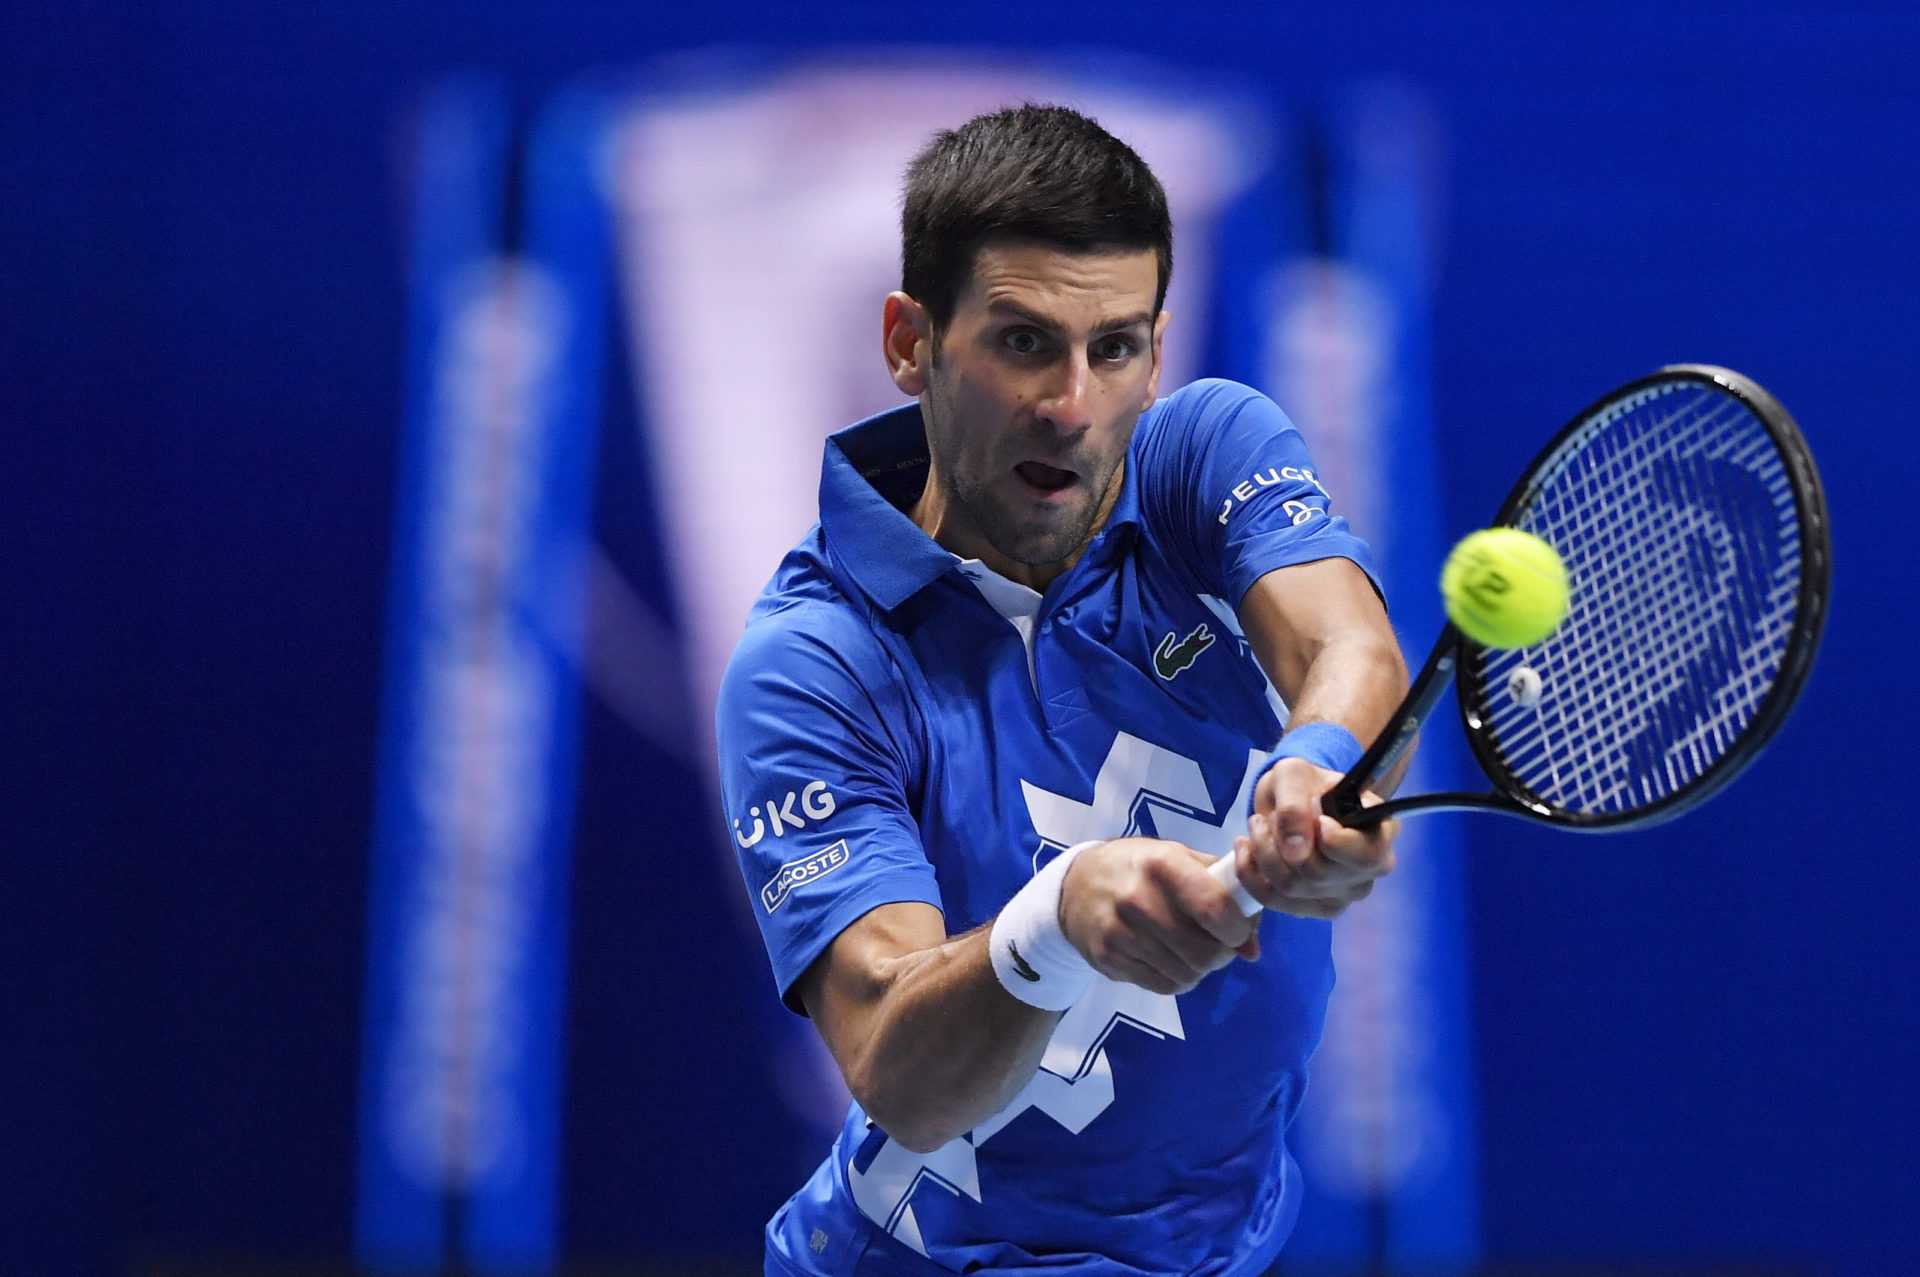 Meilleur joueur sous pression: Novak Djokovic devant Rafael Nadal et Roger Federer